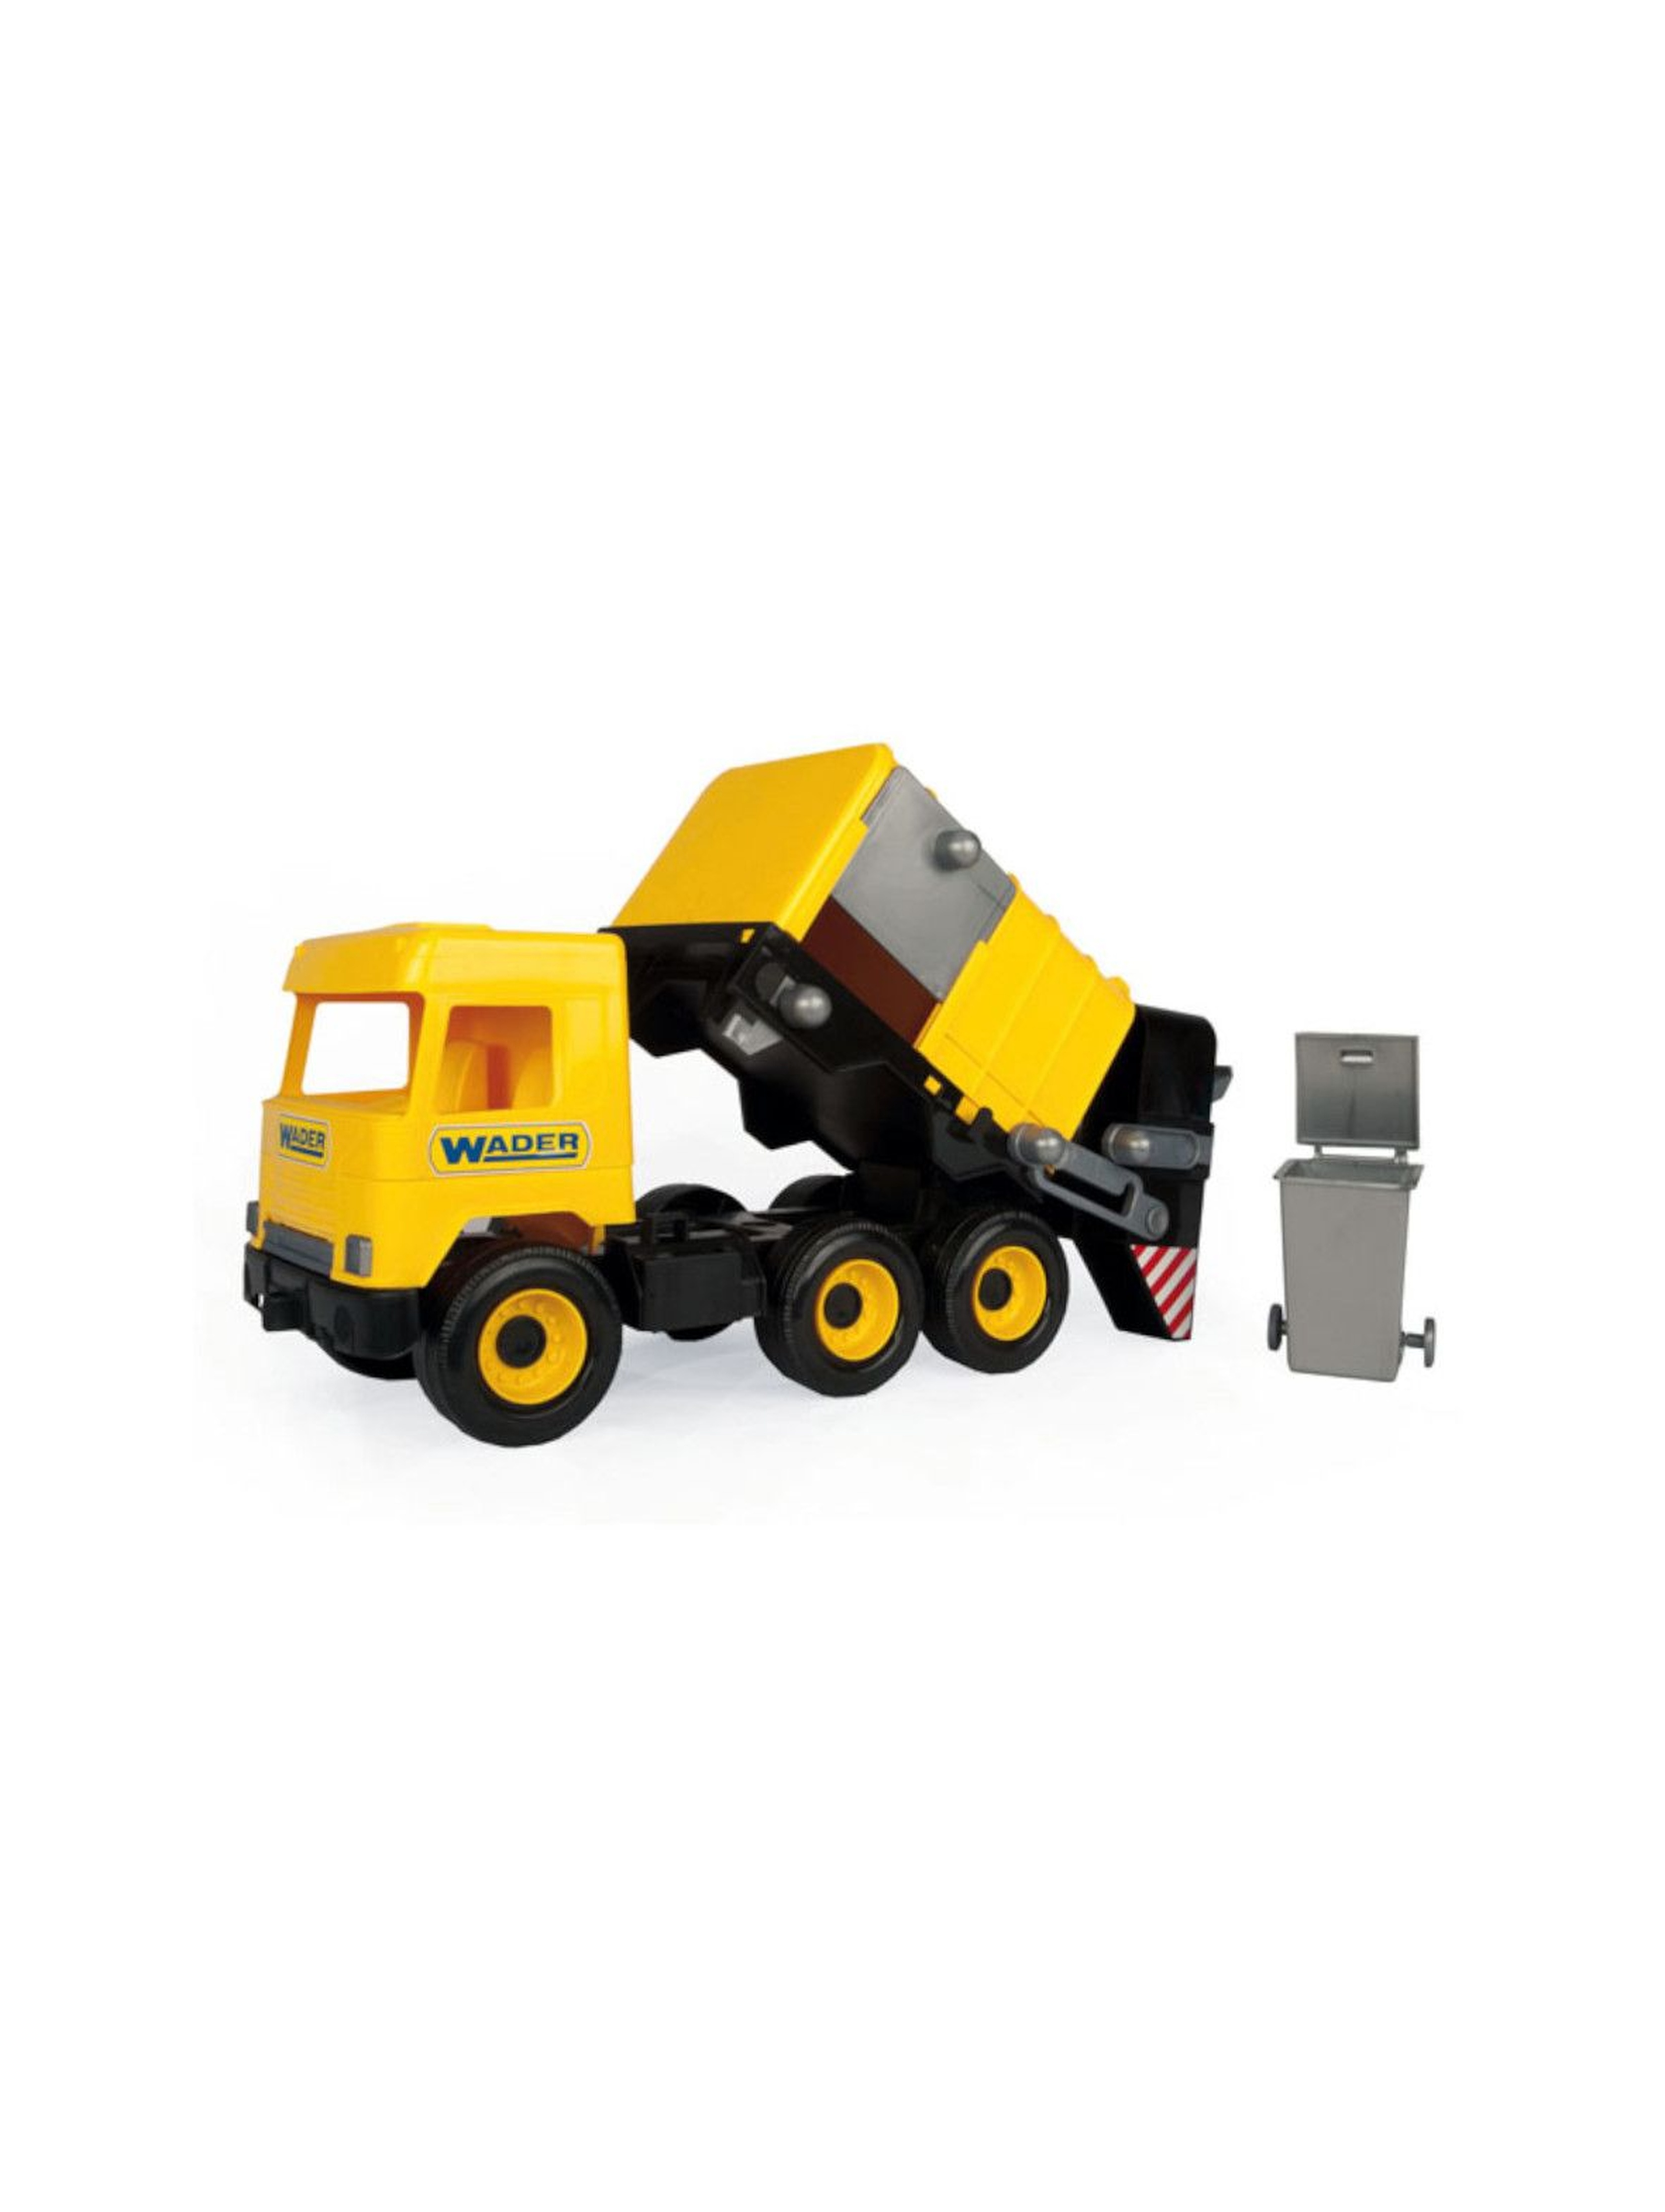 Middle Truck śmieciarka żółta